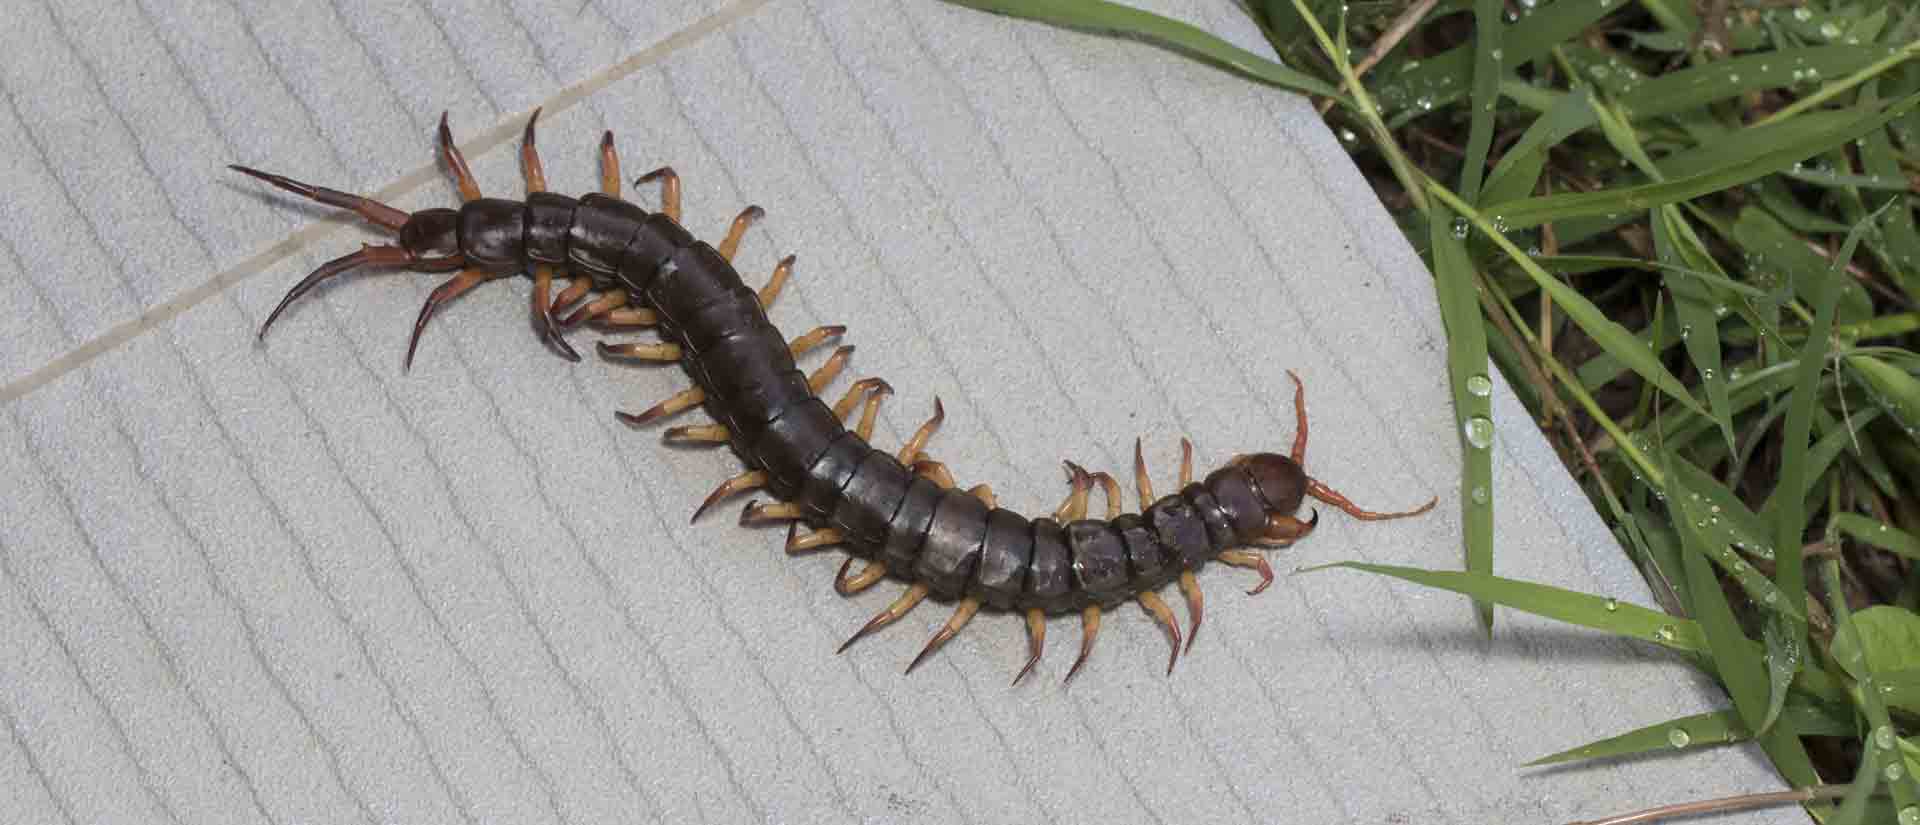 centipede pest control kearny mesa